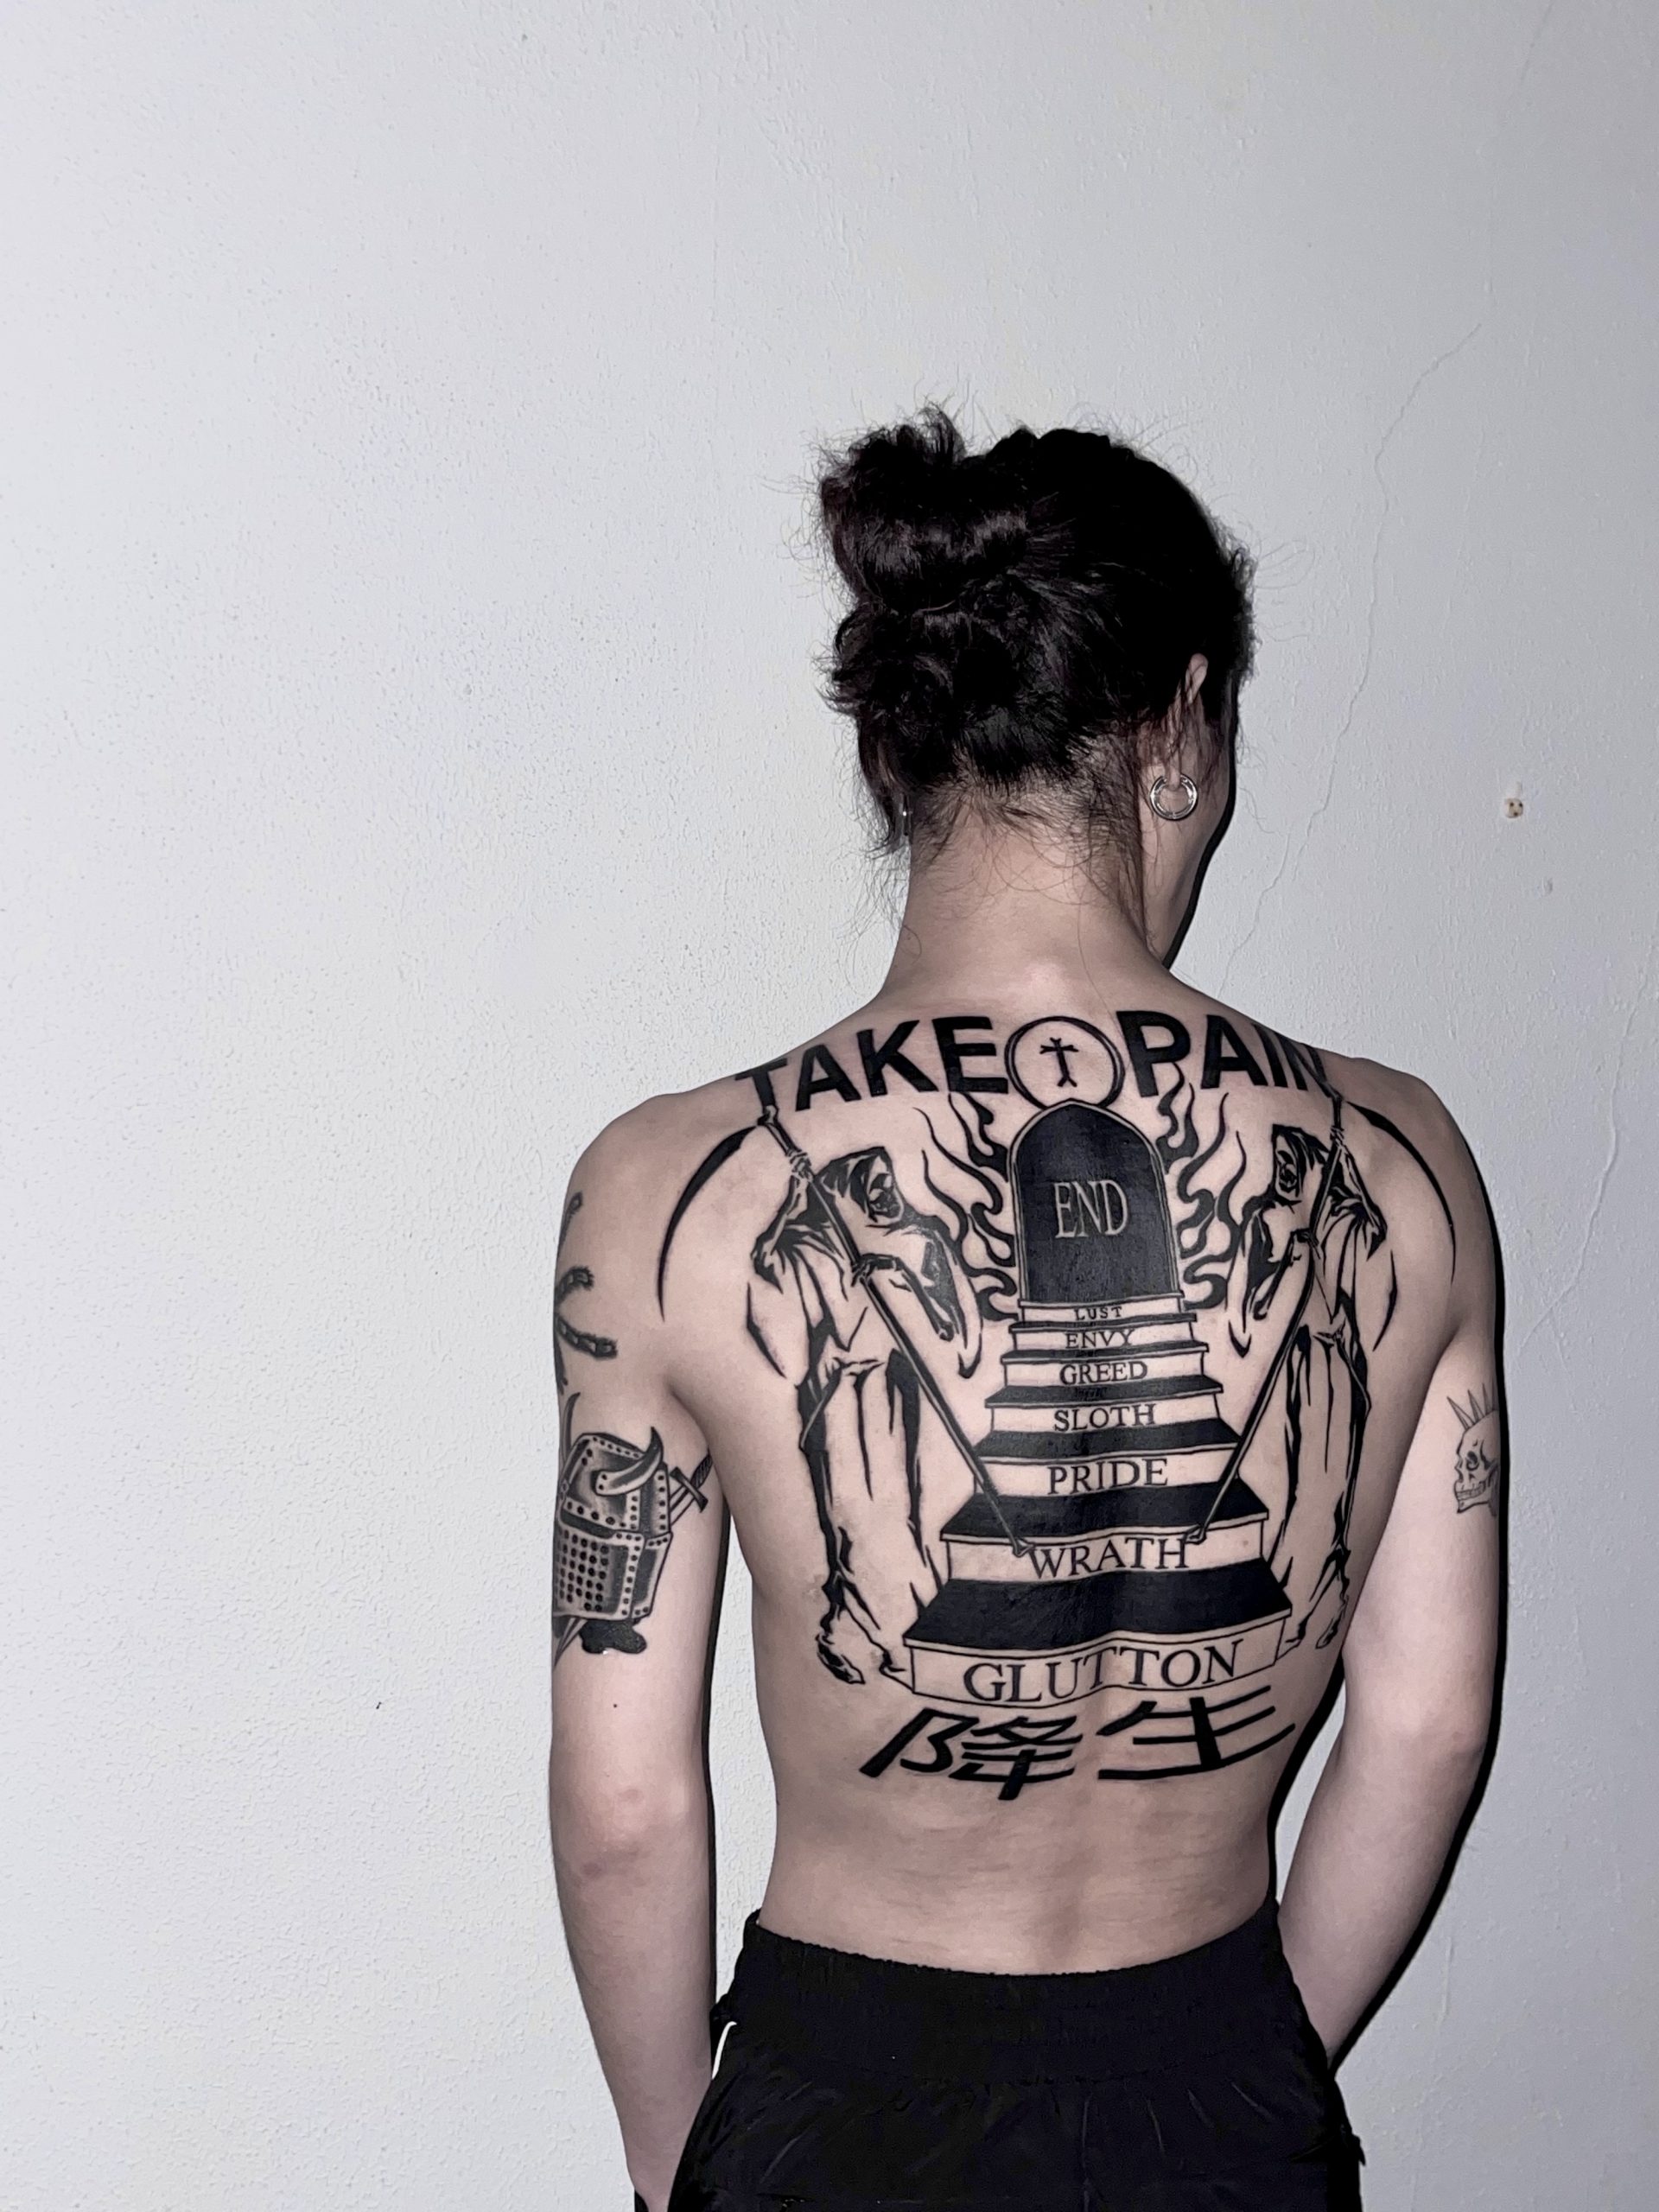 Religious tattoos - Best Tattoo Ideas Gallery